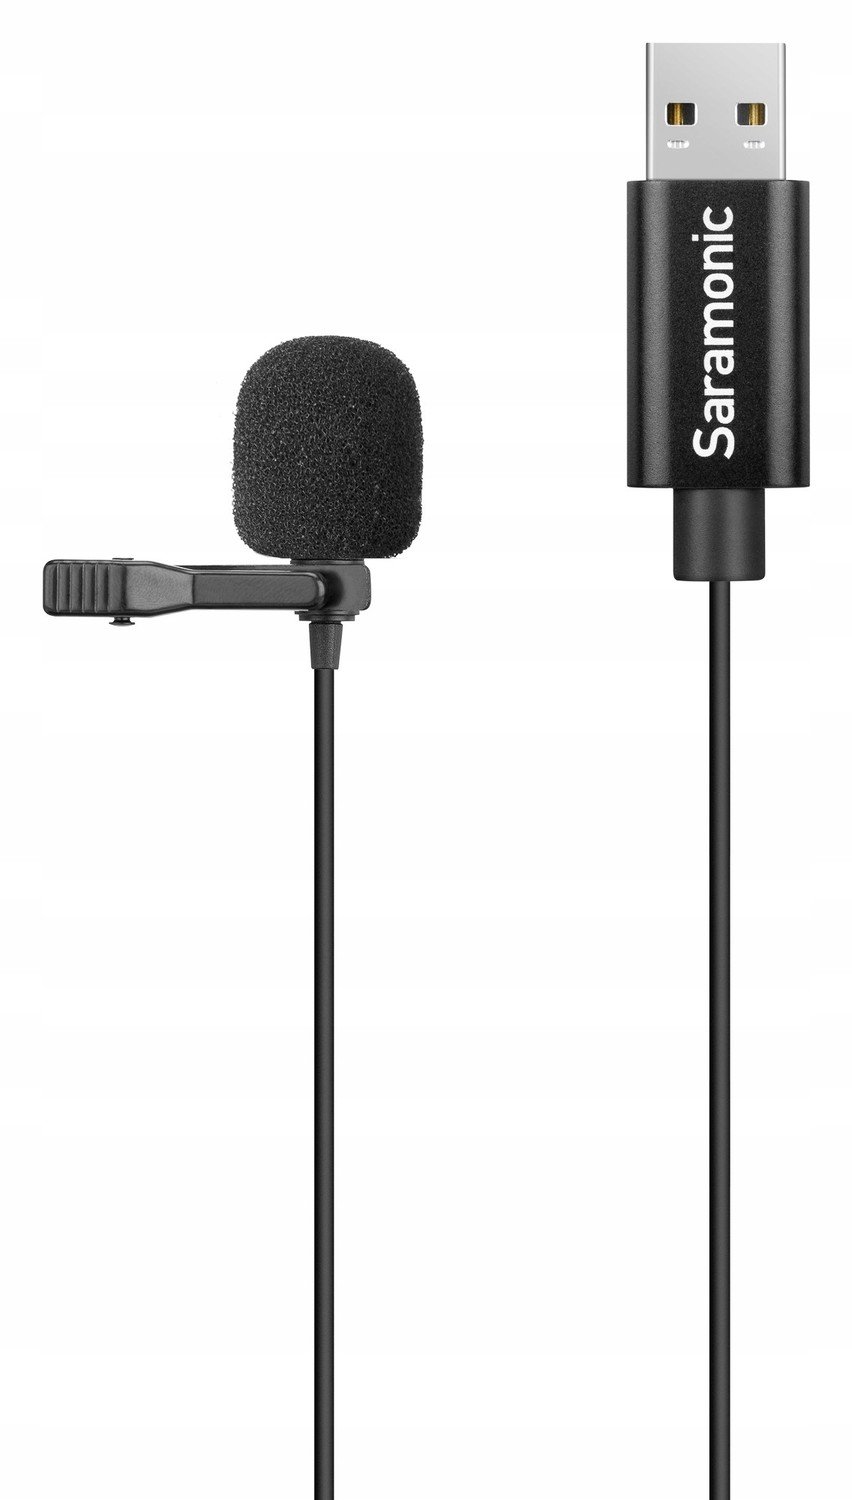 Saramonic SR-ULM10 kravatový mikrofon s Usb konektorem